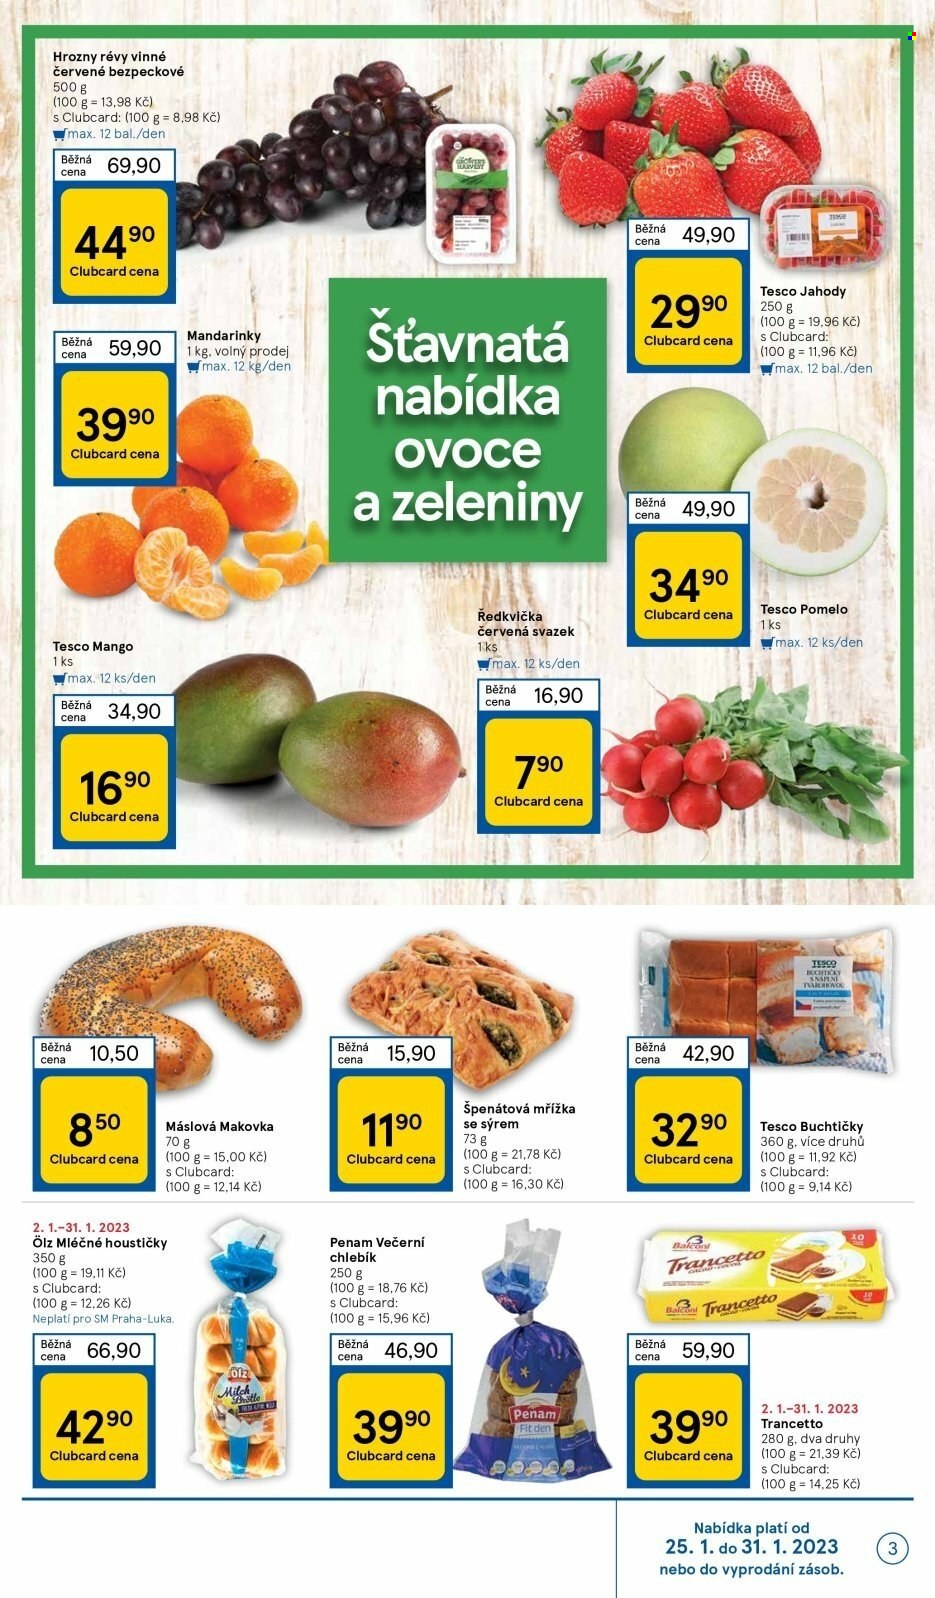 thumbnail - Leták TESCO supermarket - 25.1.2023 - 31.1.2023 - Produkty v akci - hrozny, jahody, mřížka, pečivo, slané pečivo, brioška, houstičky, mléčné houstičky, Ölz, sladké pečivo, chléb, Fit den, Penam, večerní chlebík, mandarinky, exotické ovoce, mango, ředkvičky, pomelo, makovka, buchty, piškotový řez, Trancetto. Strana 3.